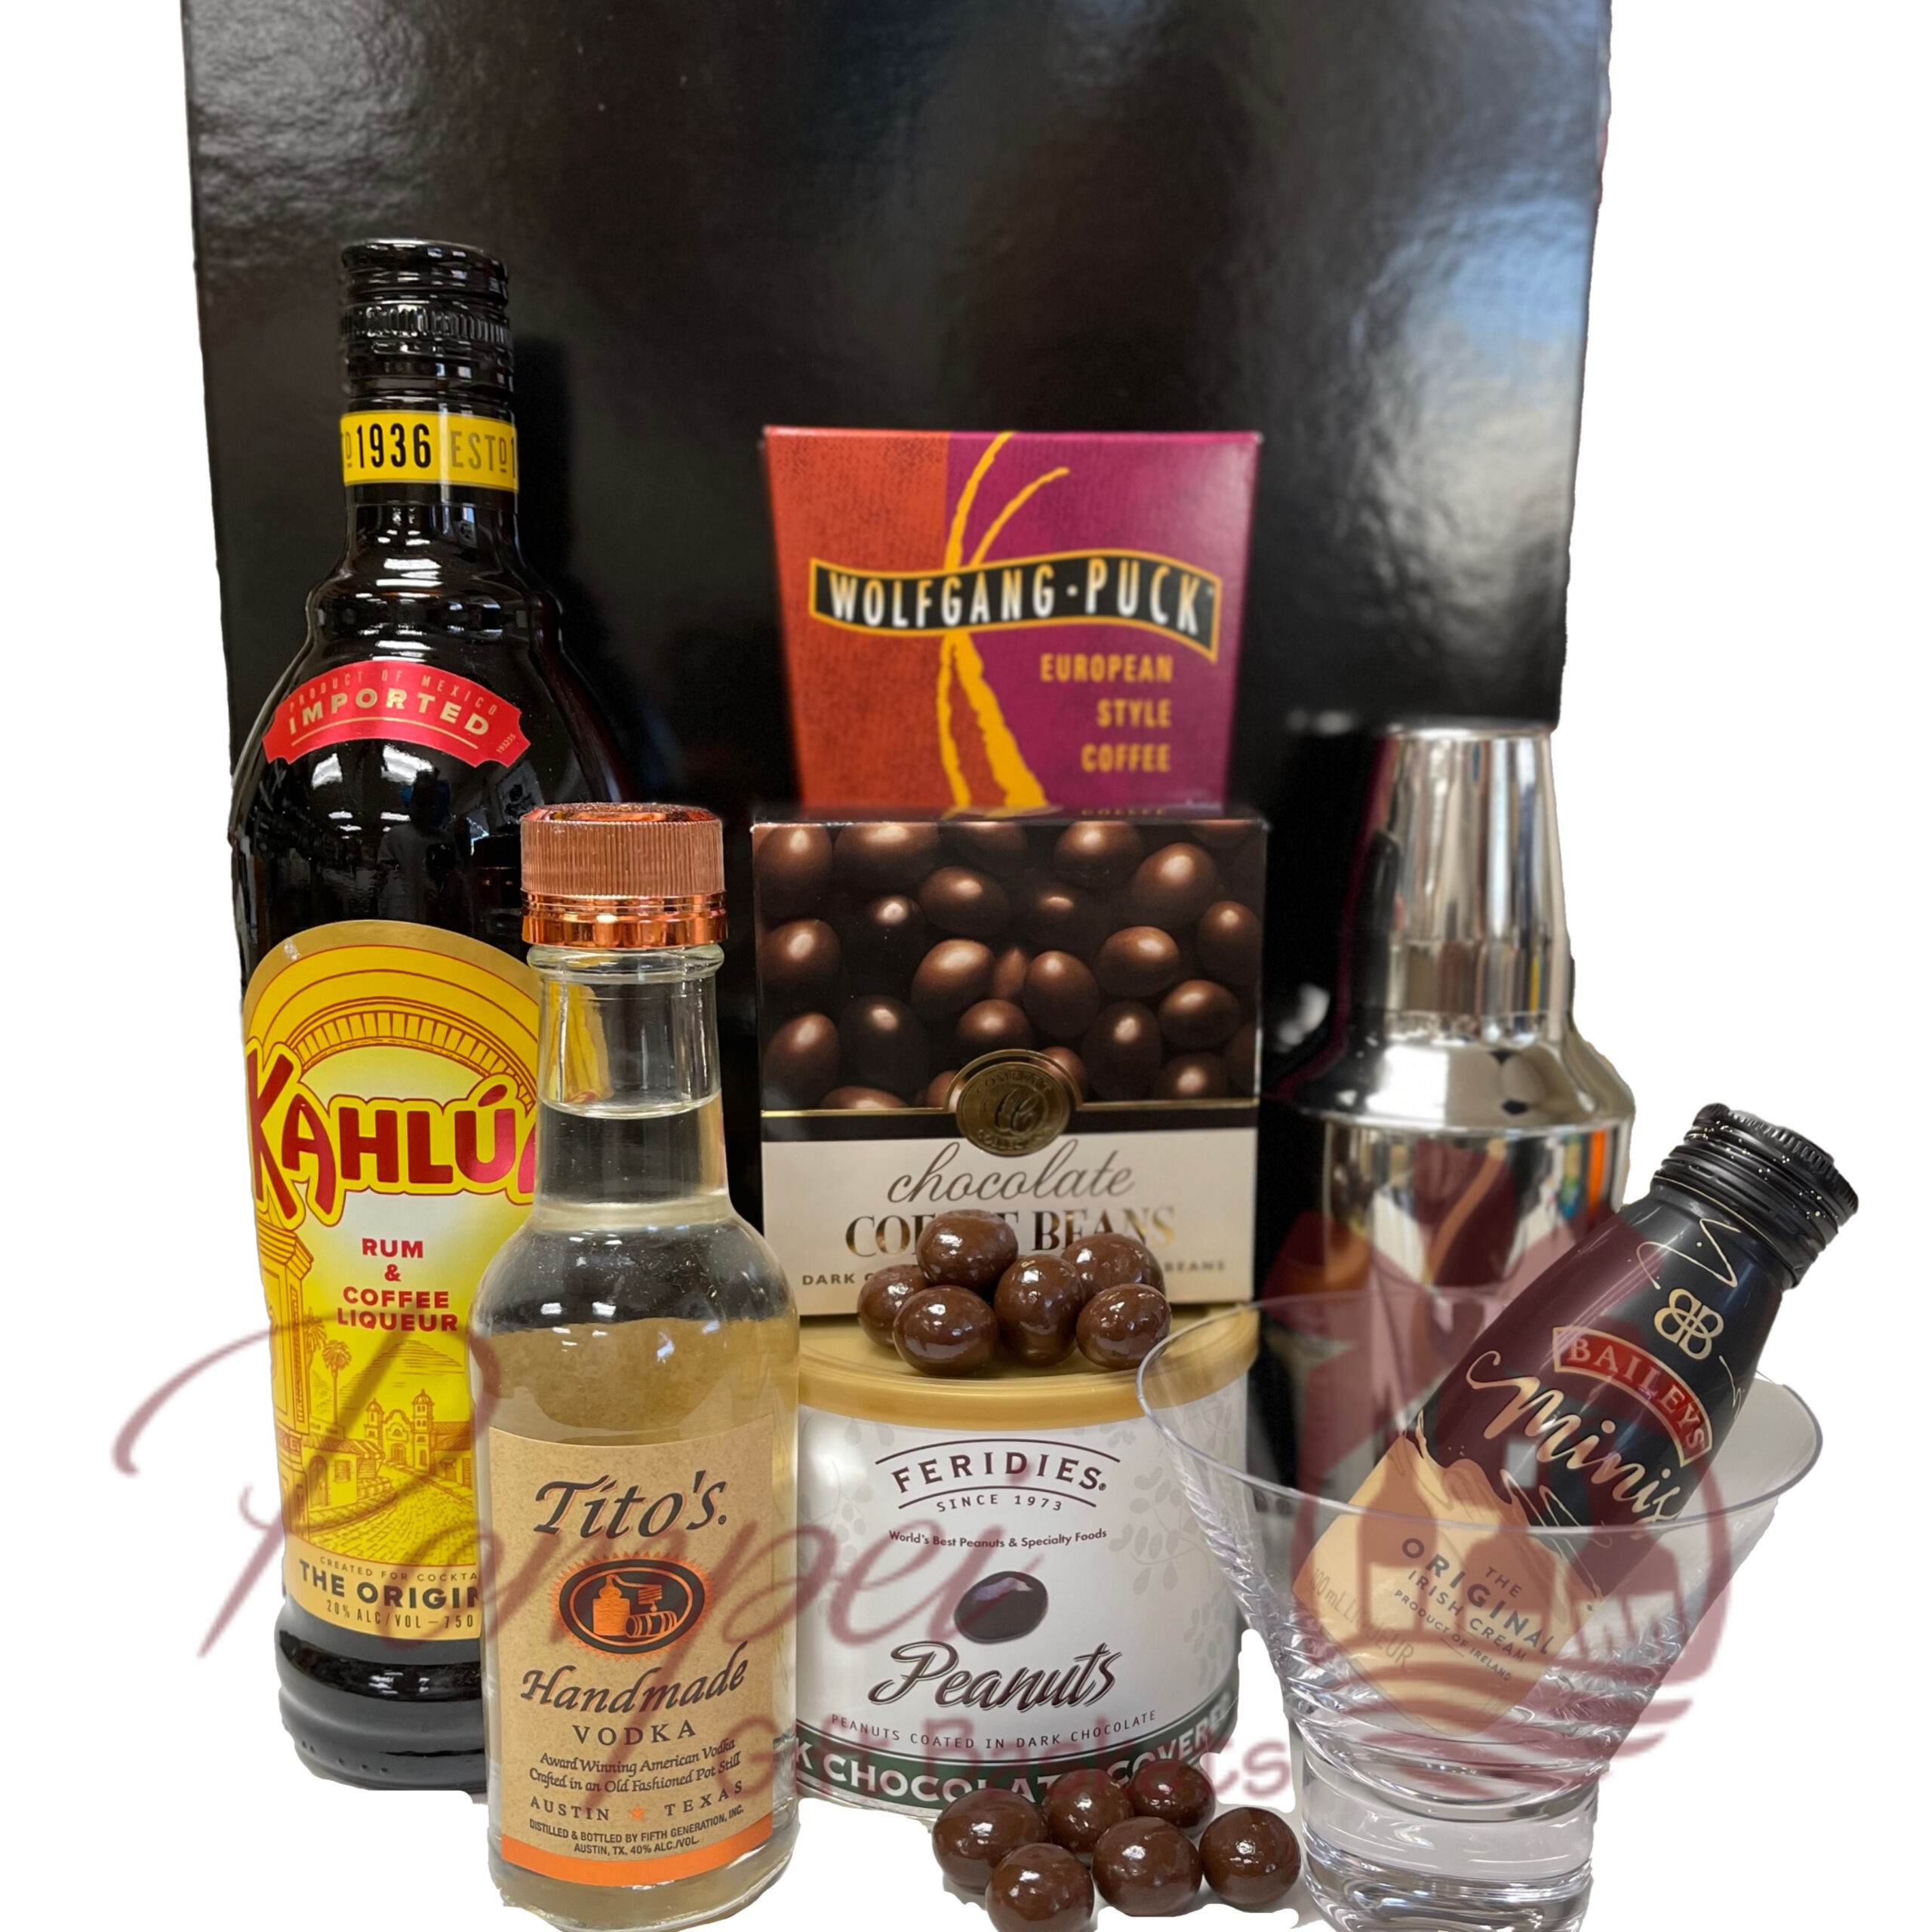 Espresso Martini Cocktail Kit Gift Set – Flask & Field